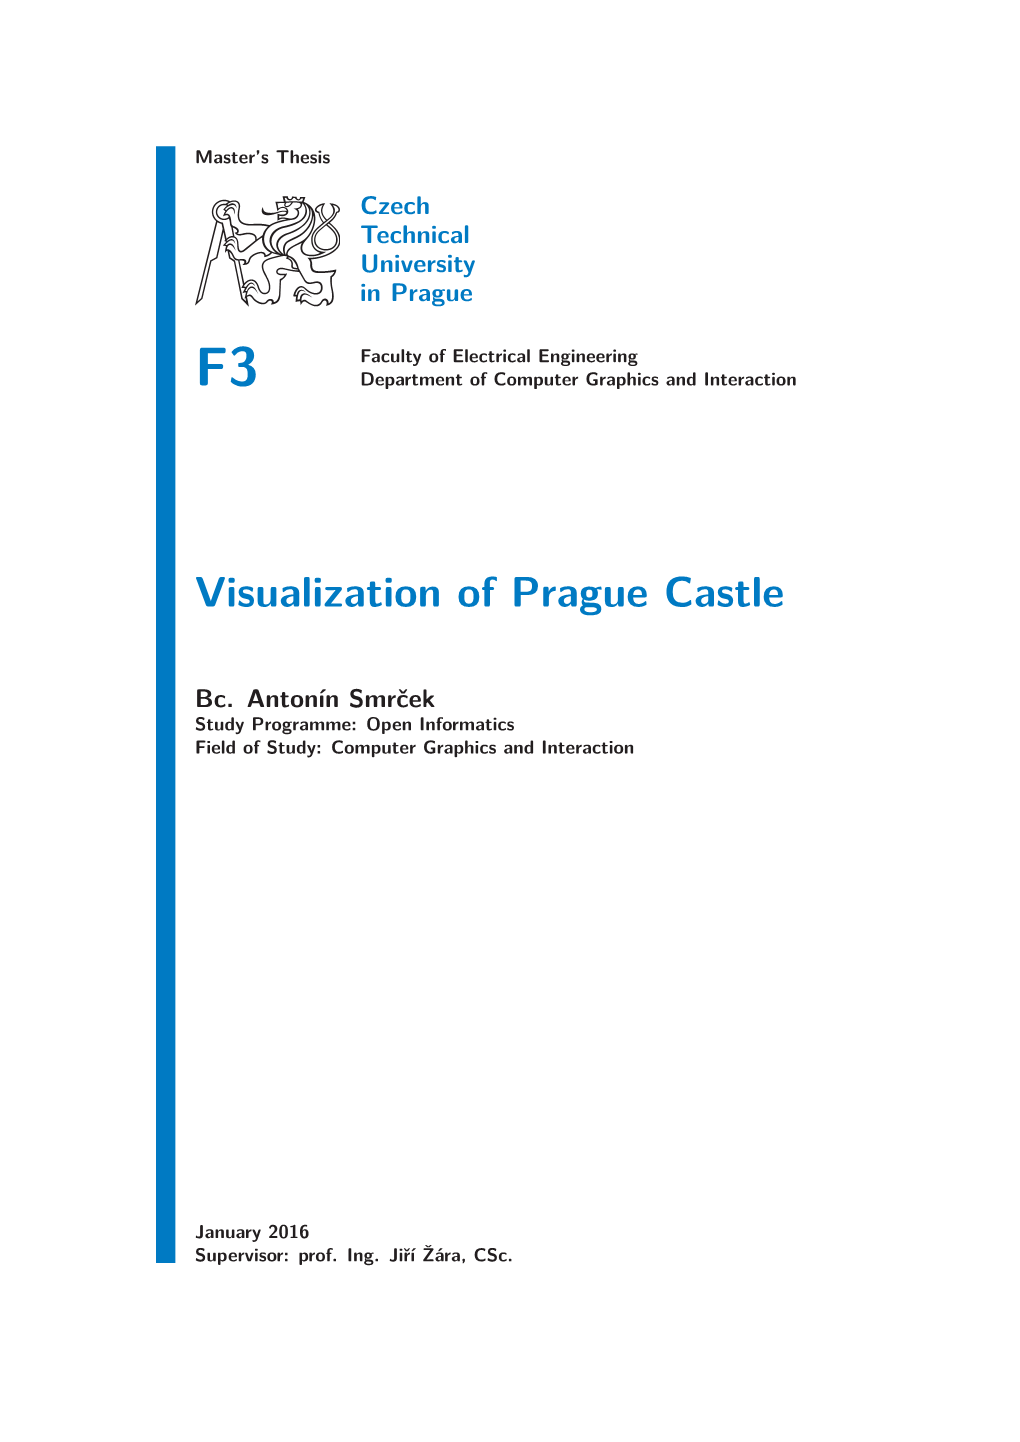 Visualization of Prague Castle